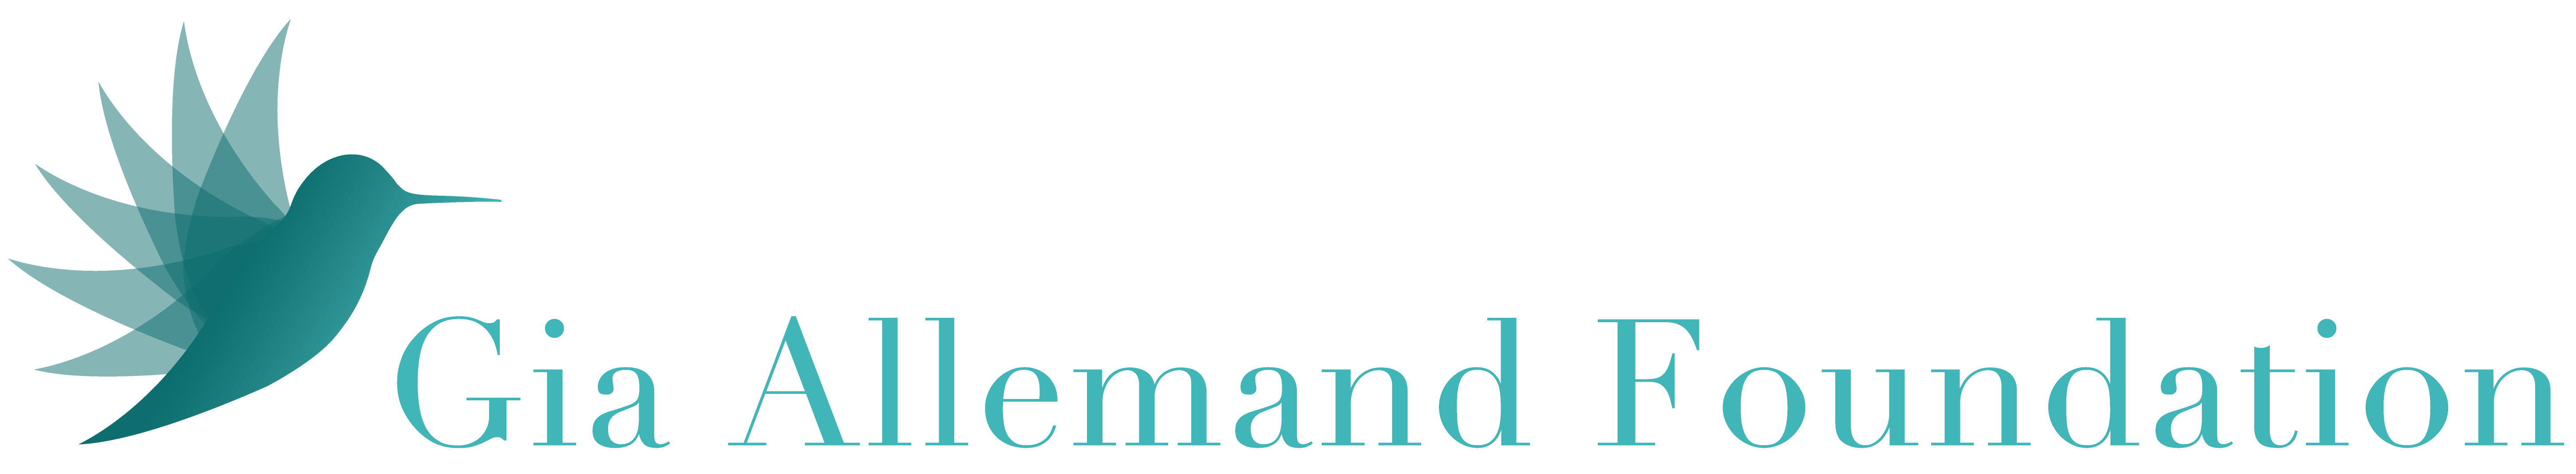 Gia Allemand Foundation logo